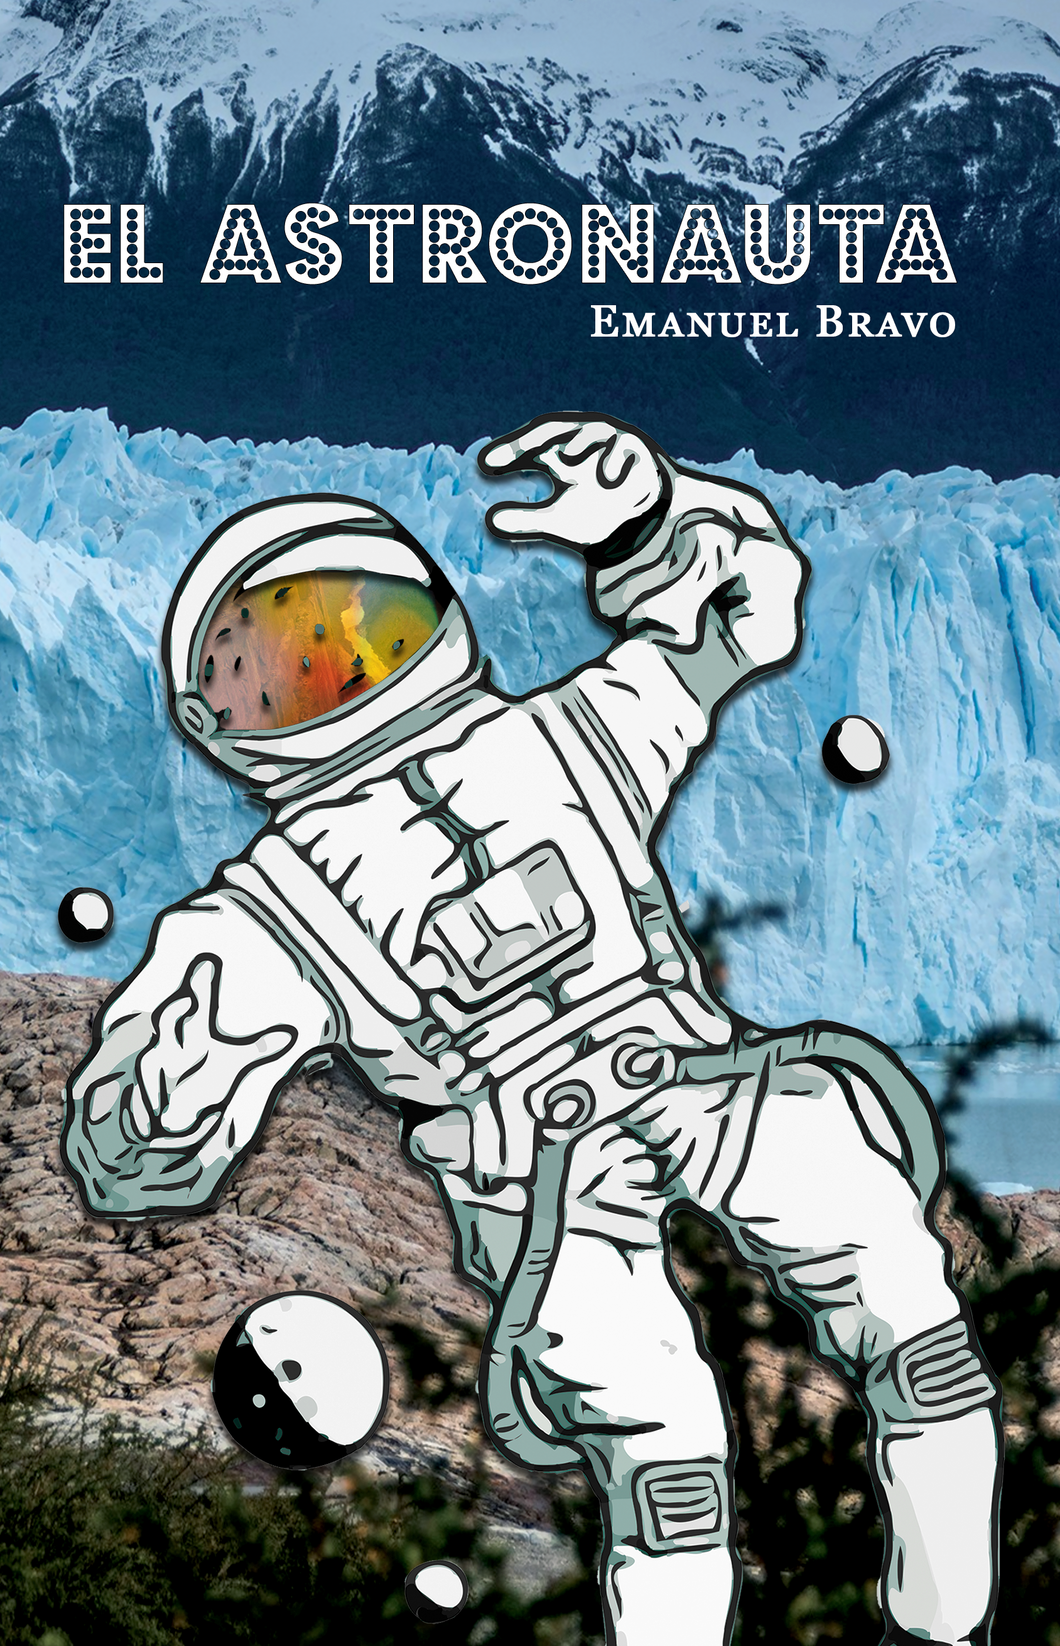 El astronauta: Emanuel Bravo